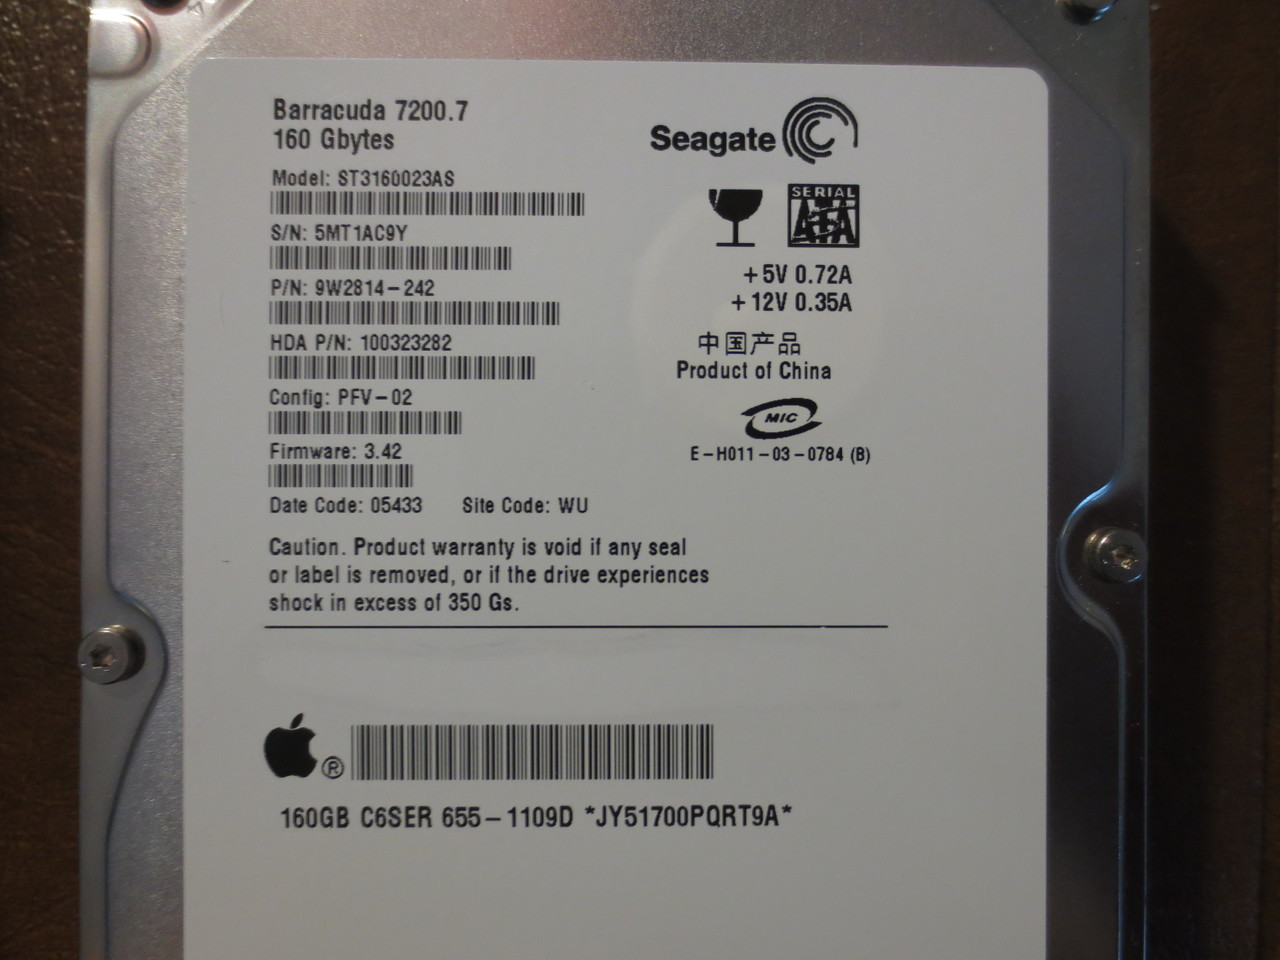 Seagate ST3160023AS 9W2814-242 FW:3.42 WU Apple#655-1109D 160gb Sata -  Effective Electronics